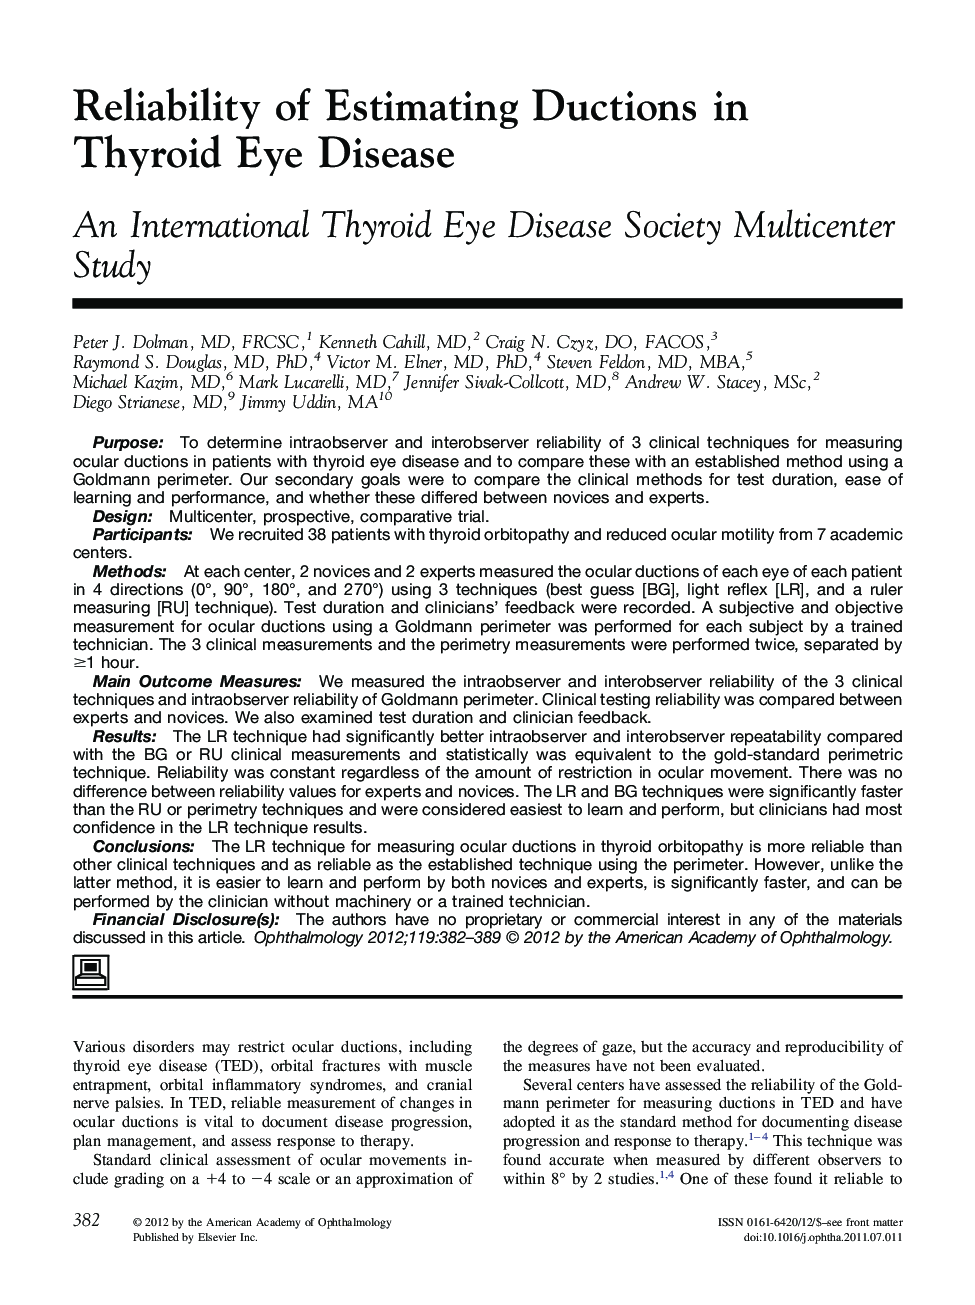 Reliability of Estimating Ductions in Thyroid Eye Disease